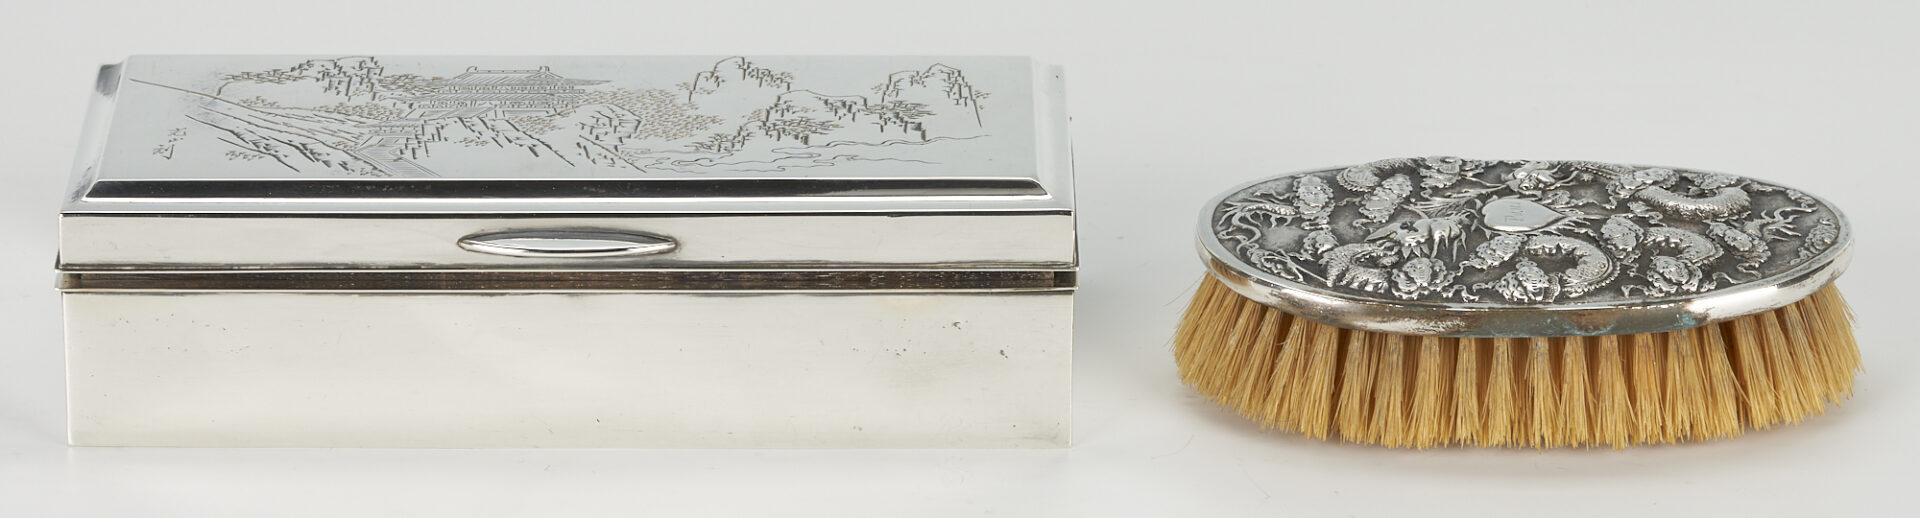 Lot 191: Chinese Silver Brush, Japanese .950 Silver Box, & Mixed Metal Vase